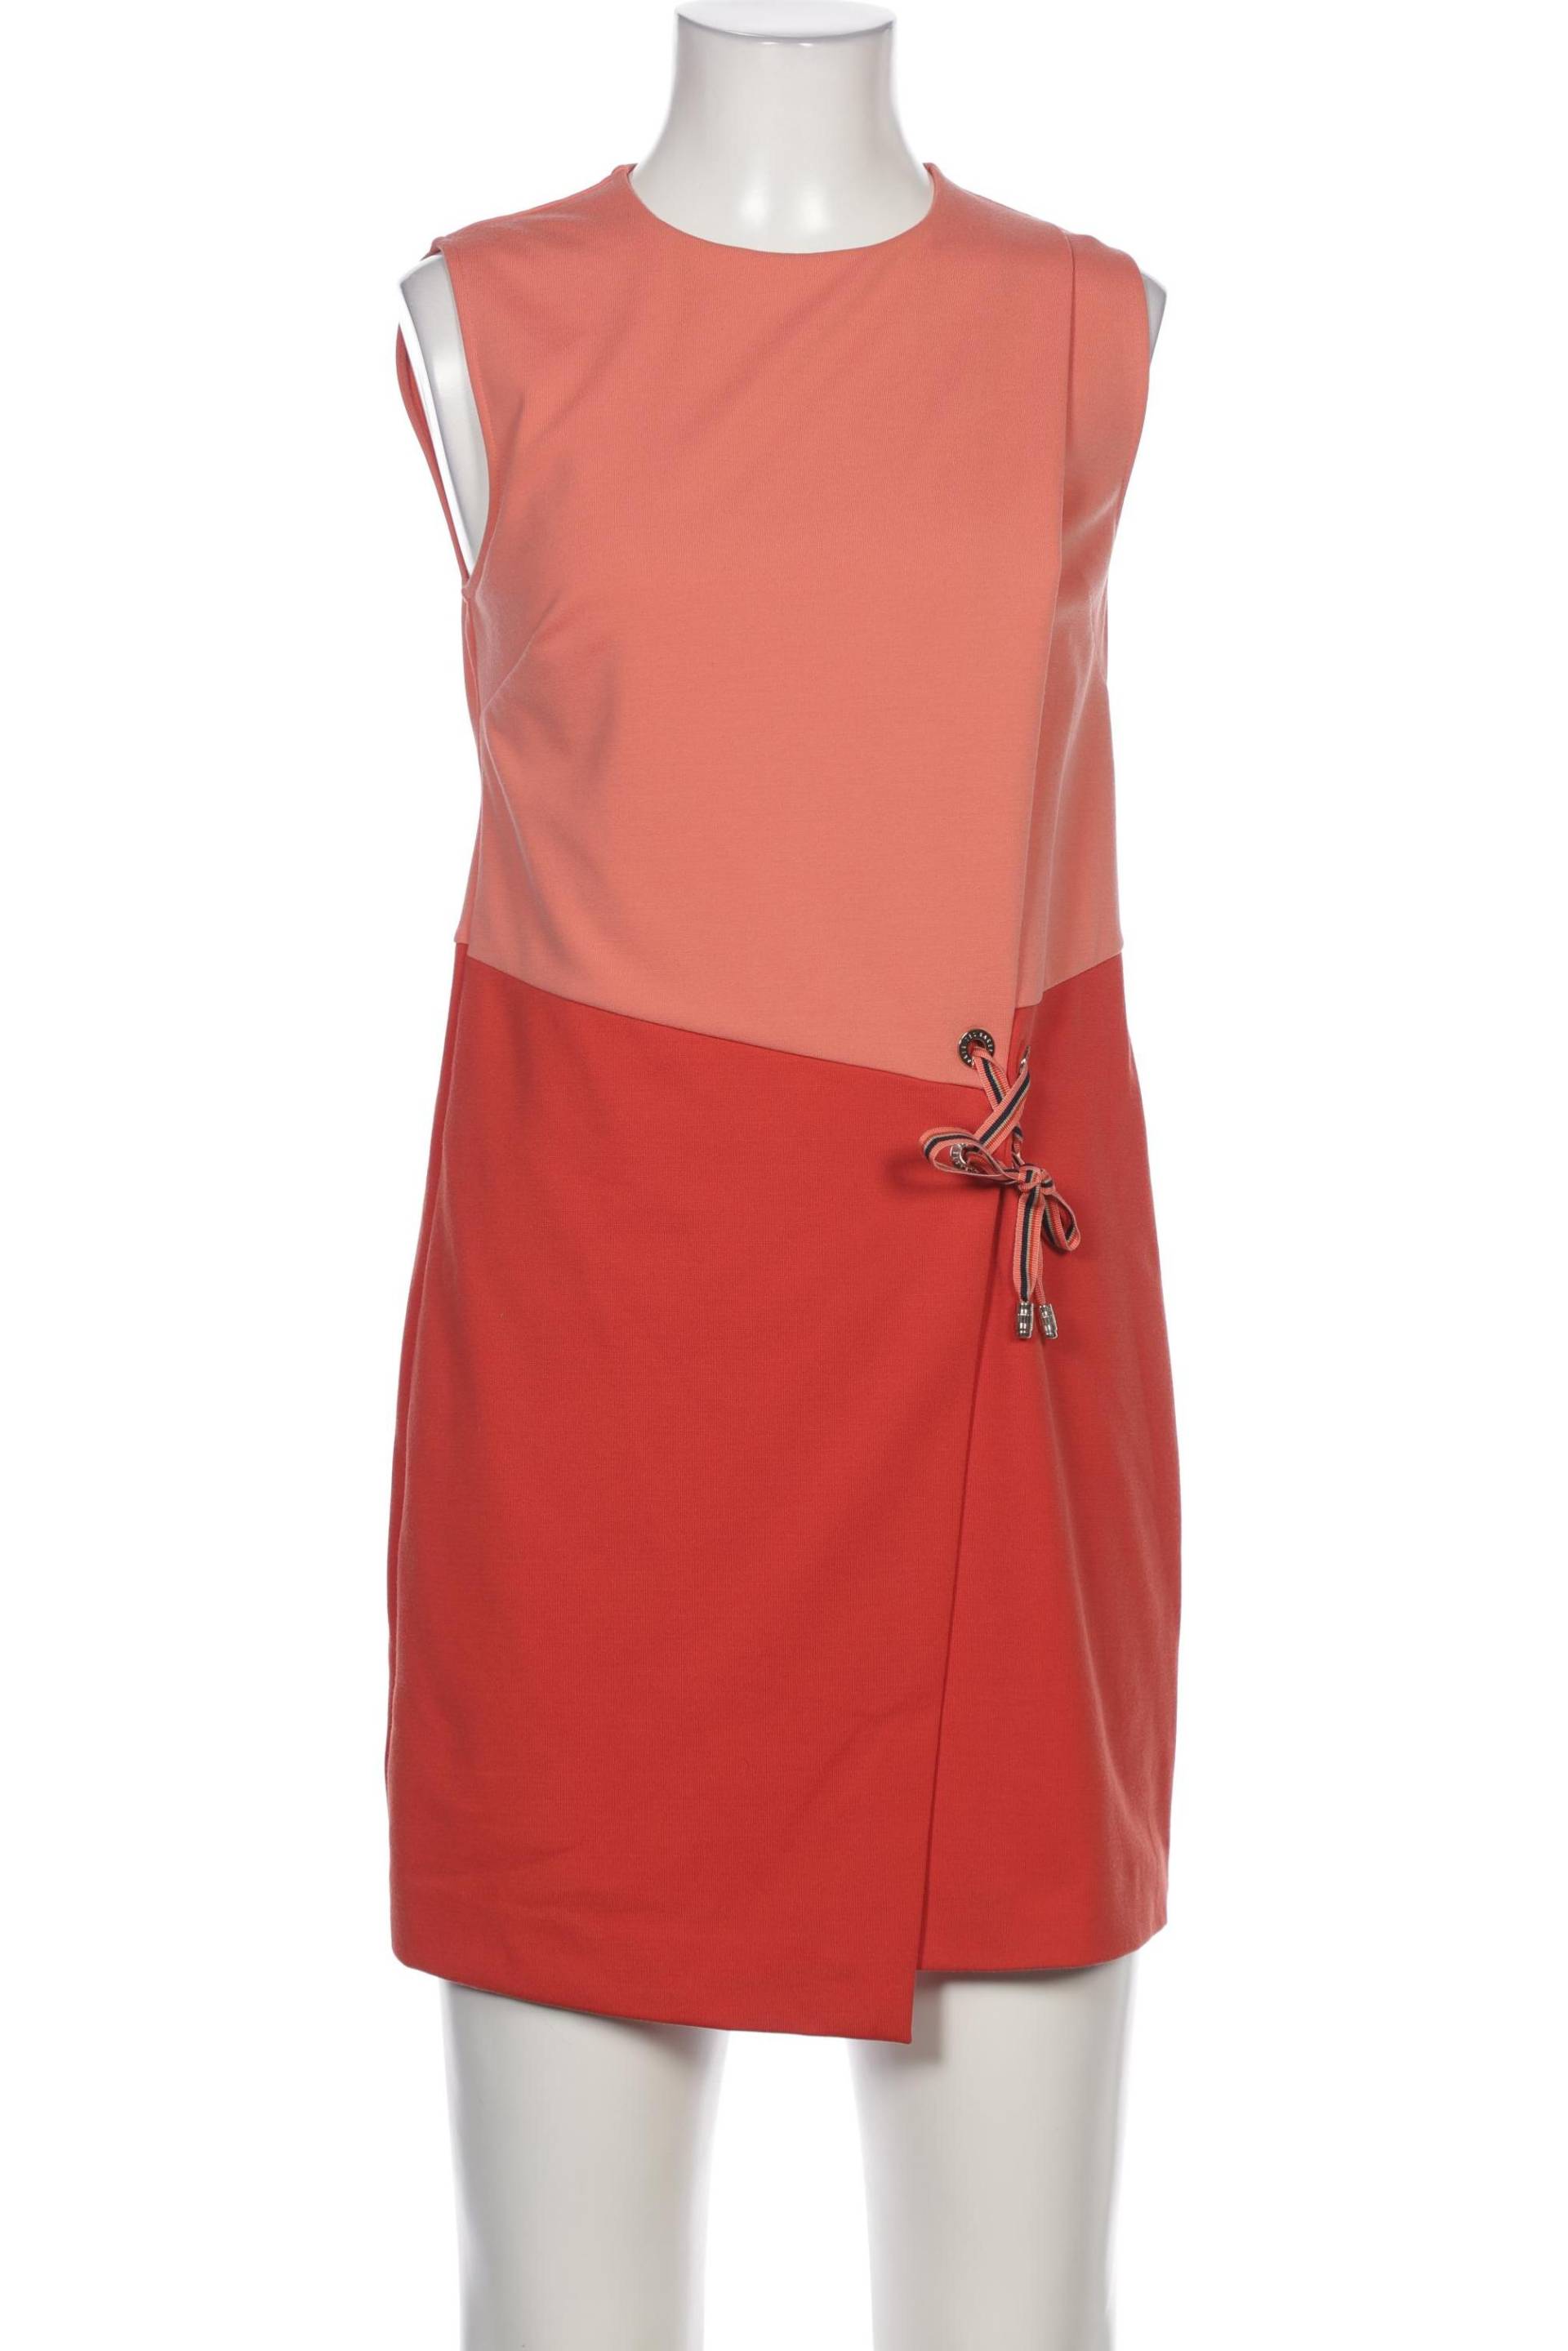 TED BAKER Damen Kleid, rot von Ted Baker